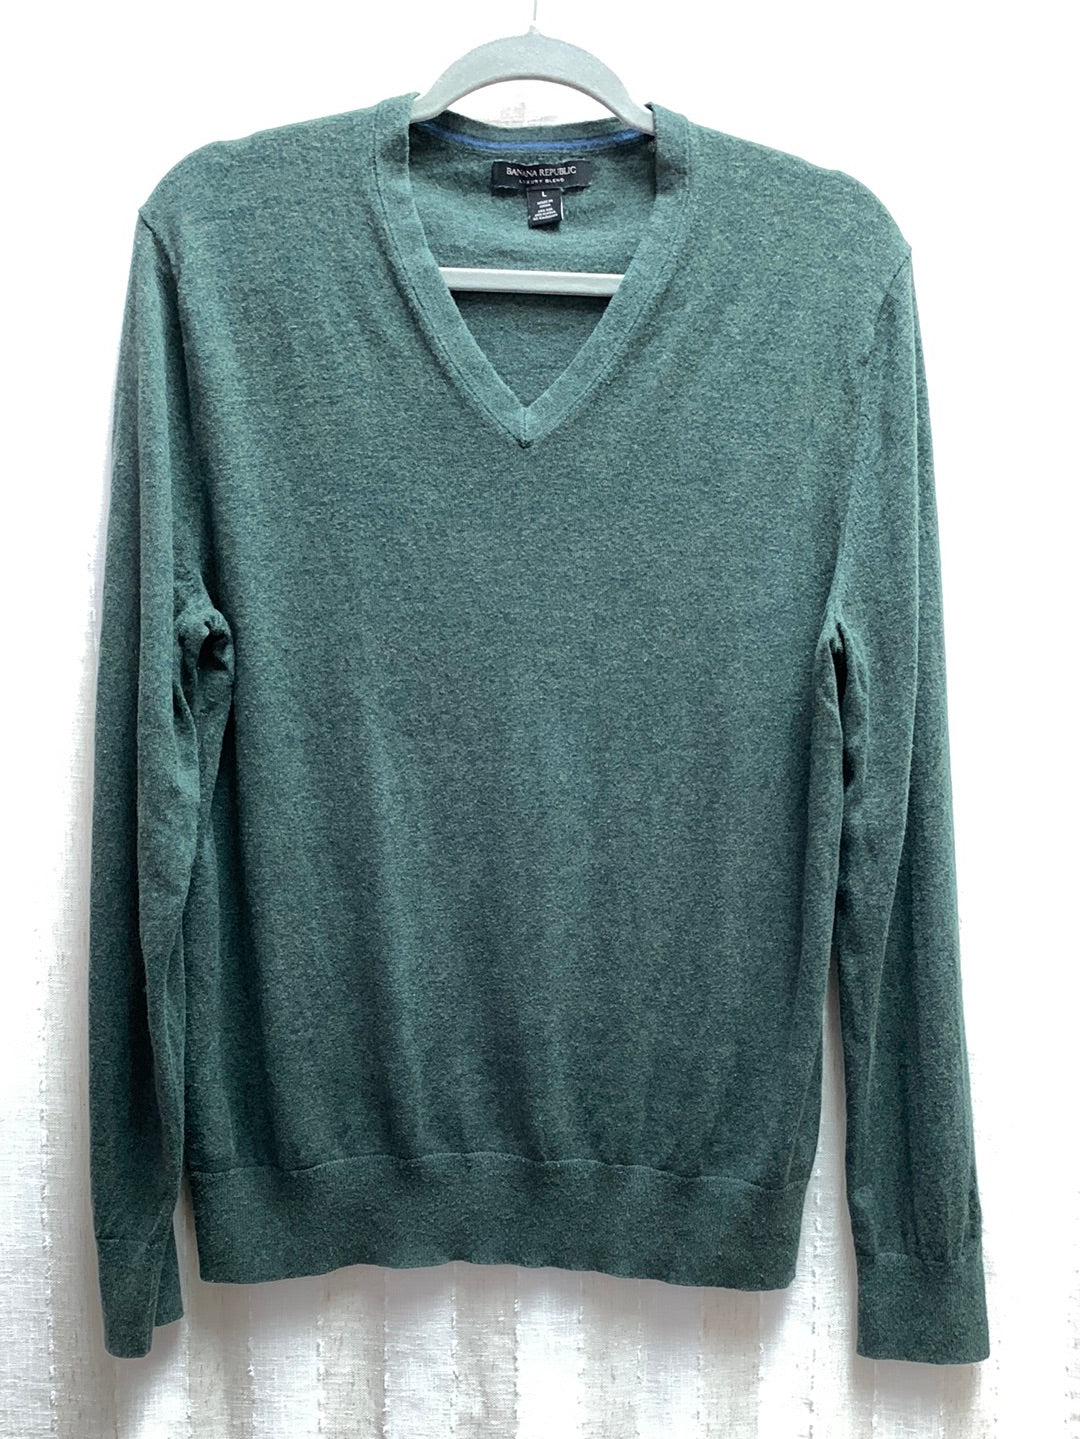 BANANA REPUBLIC marled green navy Luxury Silk Cotton Cashmere Sweater - Large